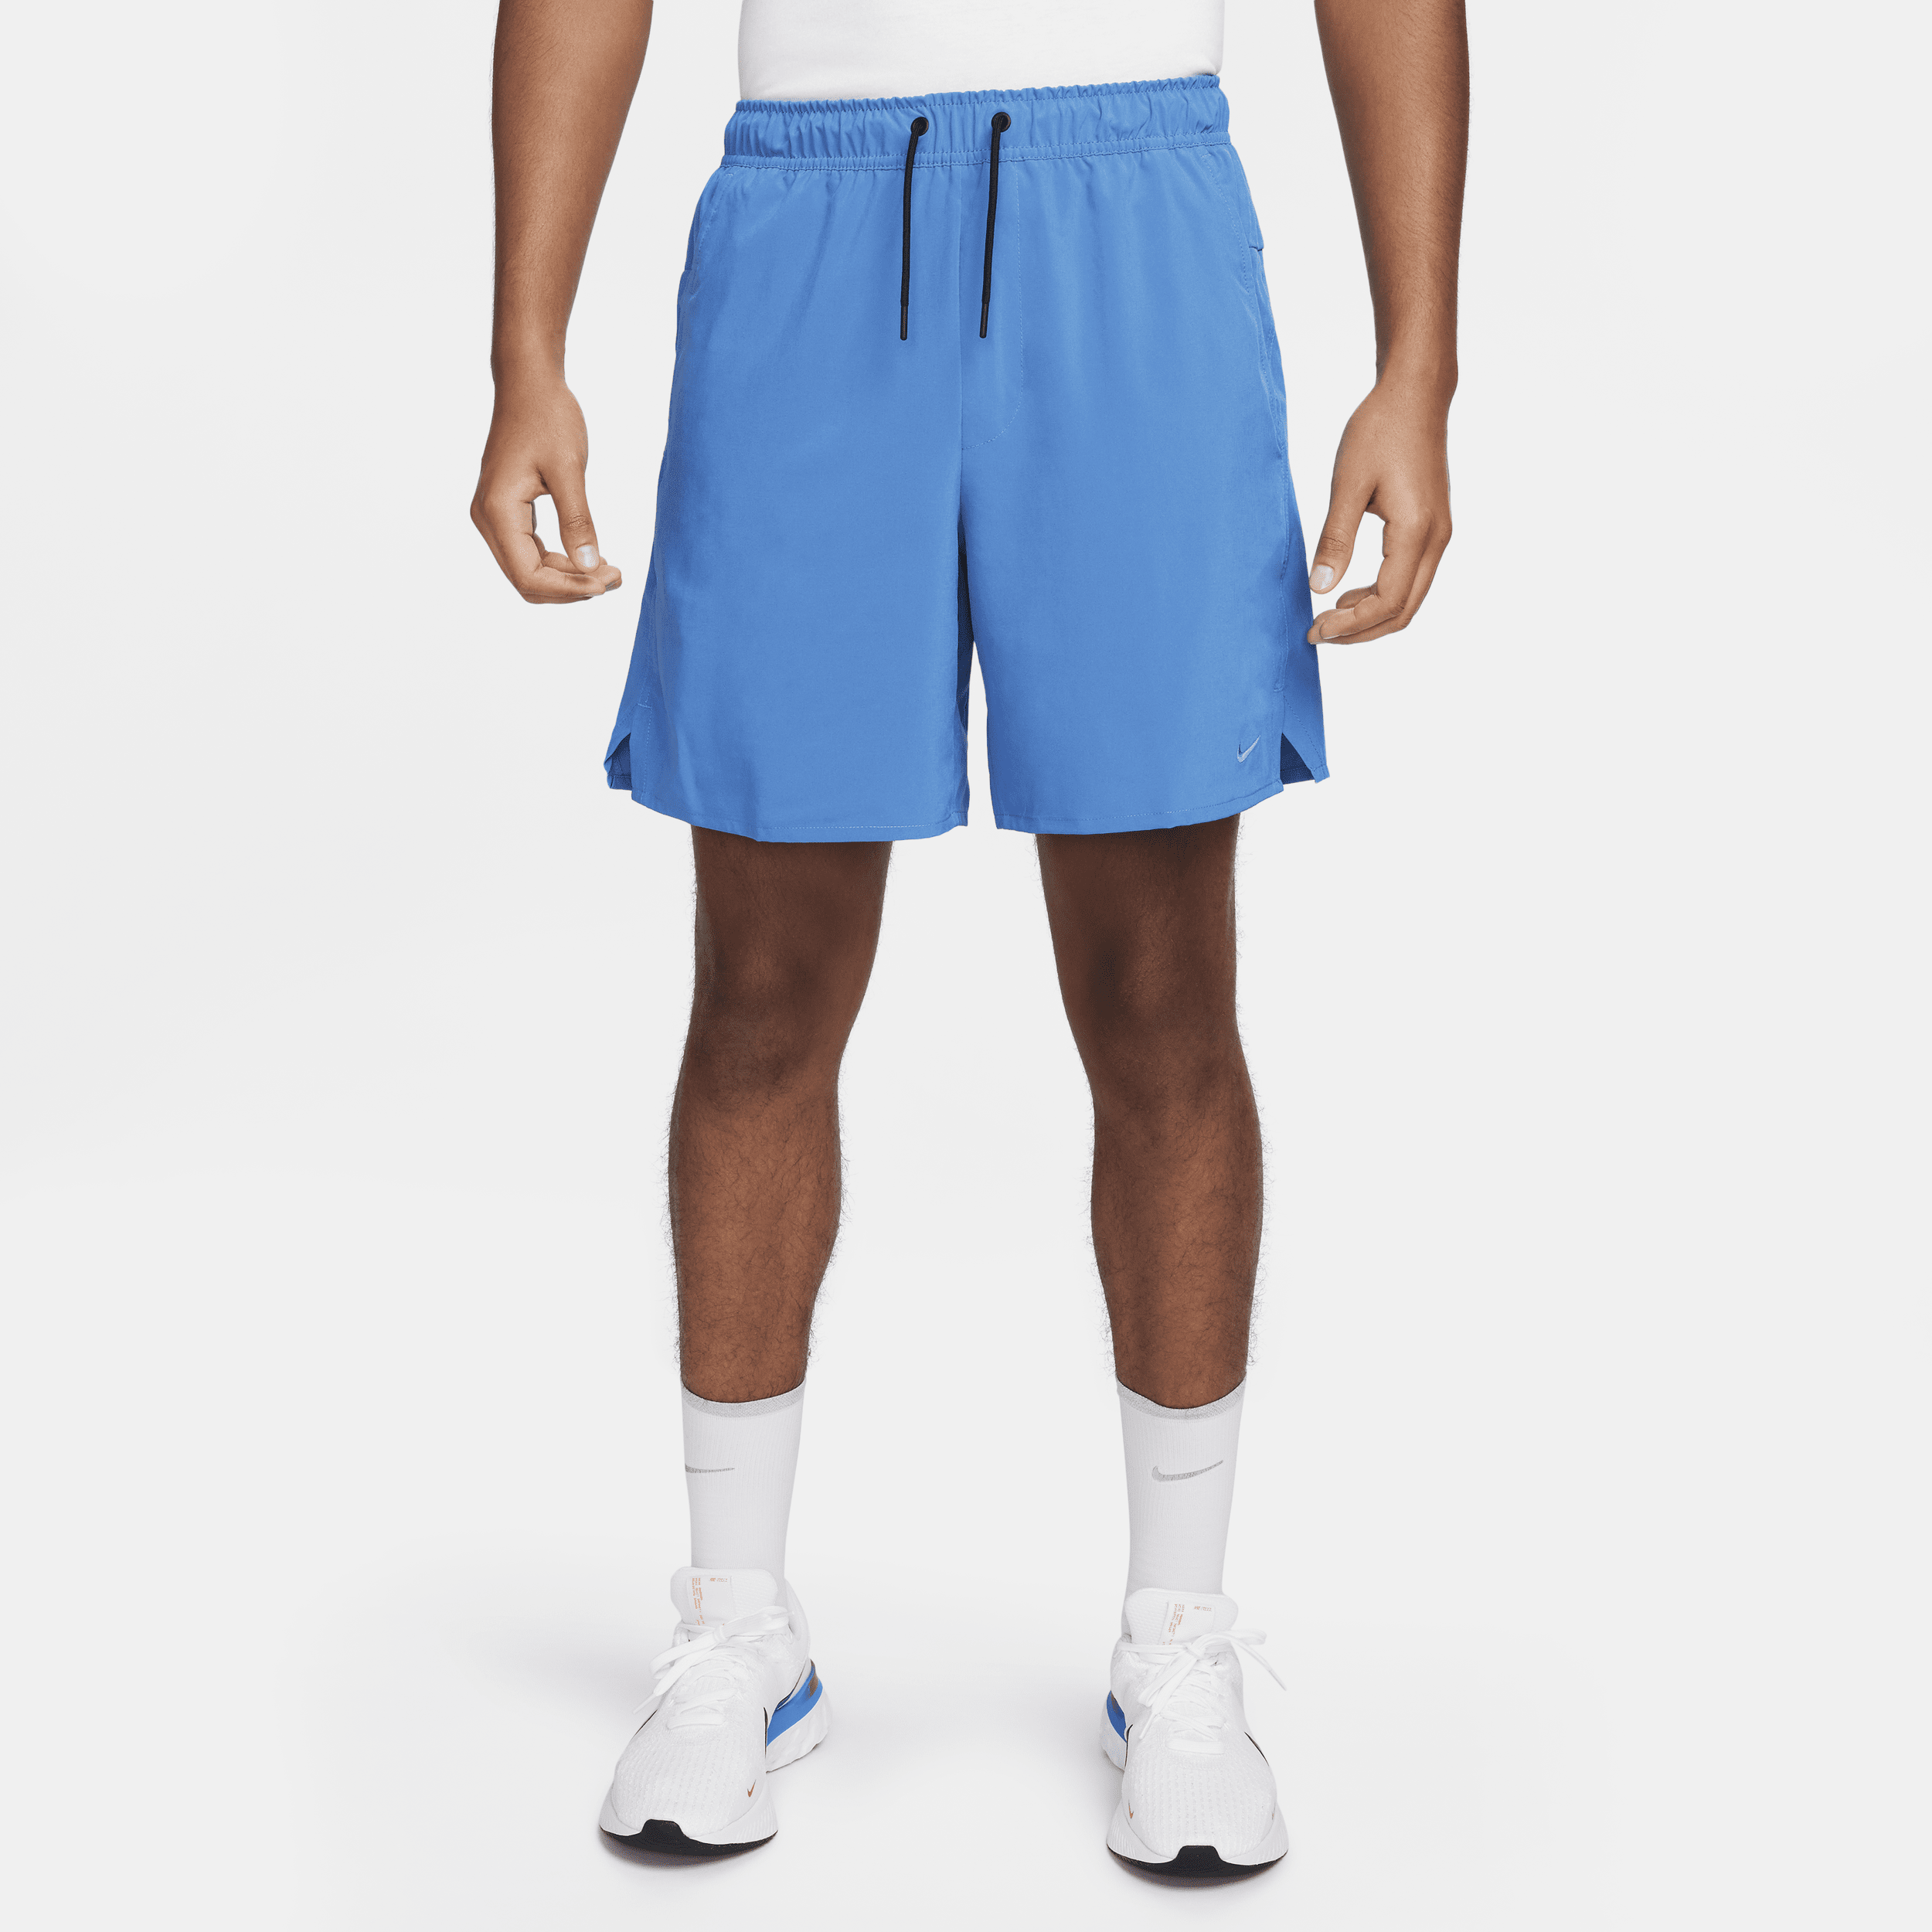 Nike Unlimited Pantalón corto Dri-FIT versátil de 18 cm sin forro - Hombre - Azul